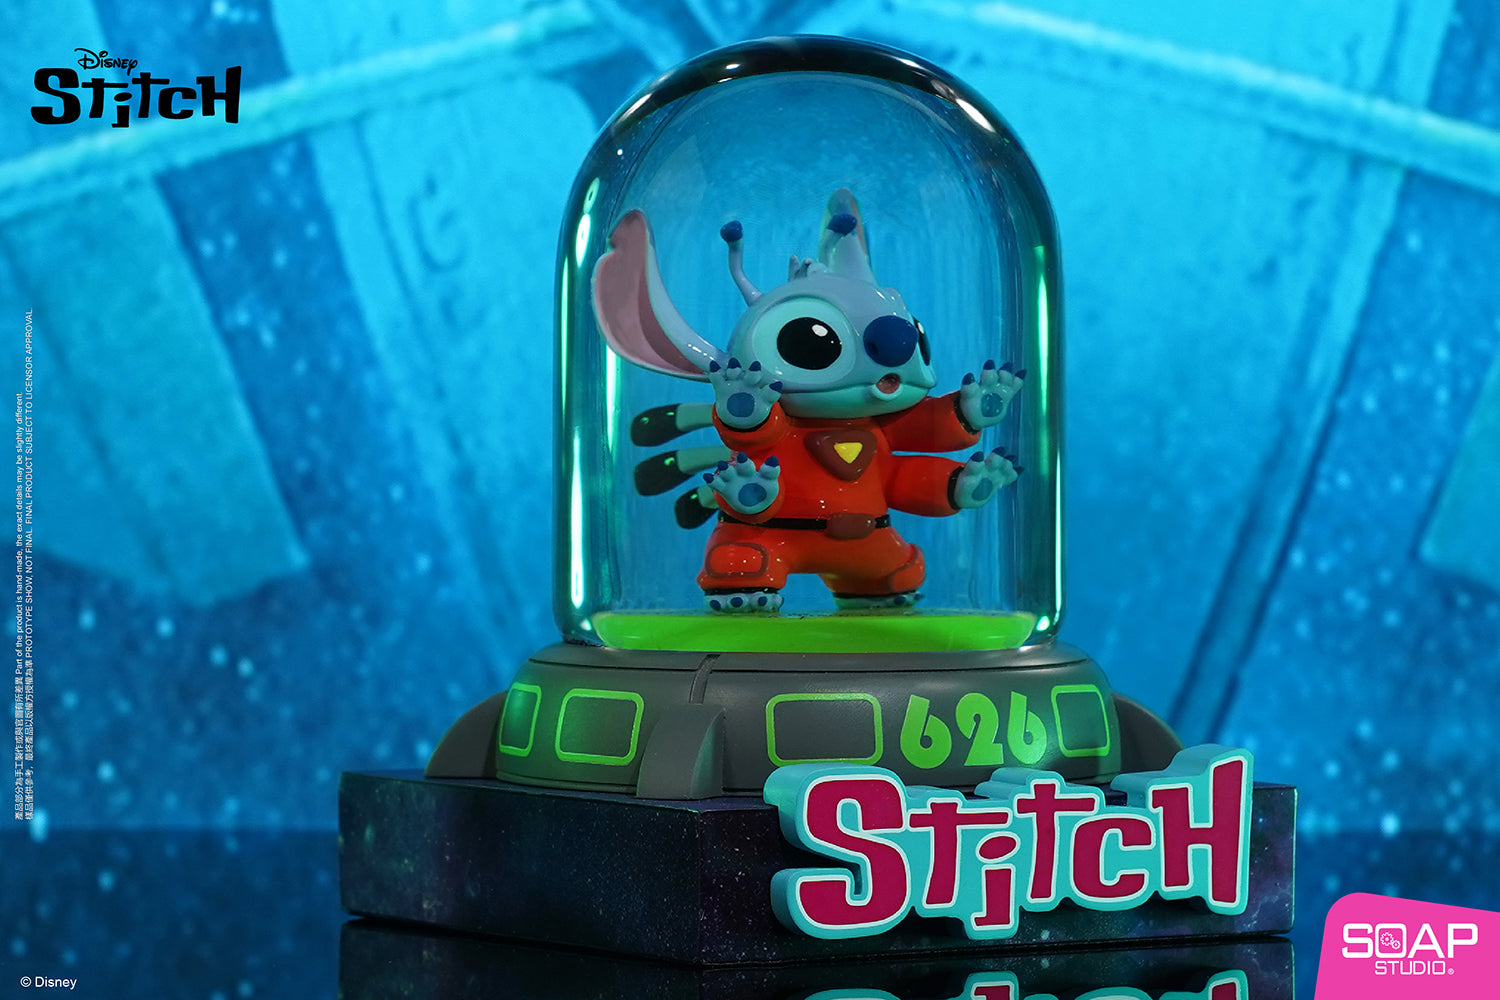 Disney Stitch Snow Globe Bubble Bath